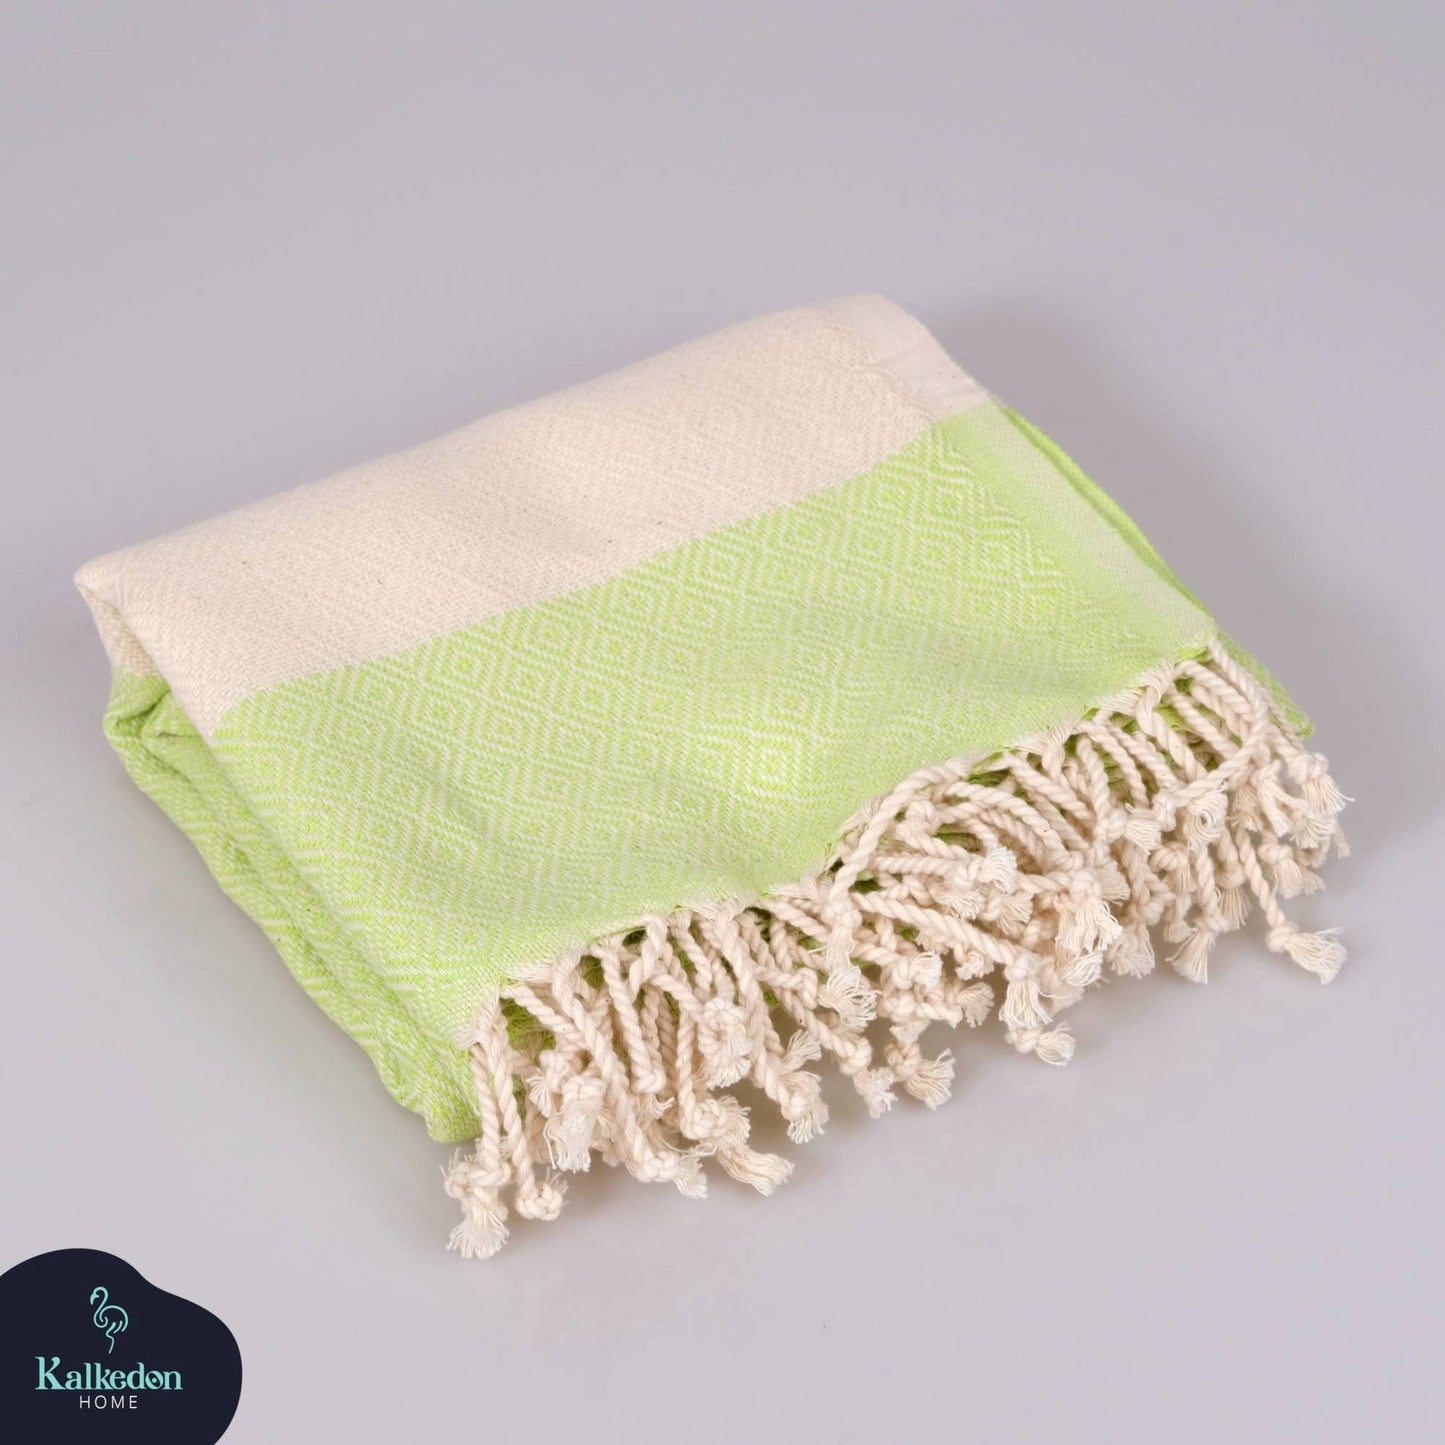 Kalkedon Towels - Turkish Towel | Lime Green Peshtemal | Sand Resistant Beach Towel